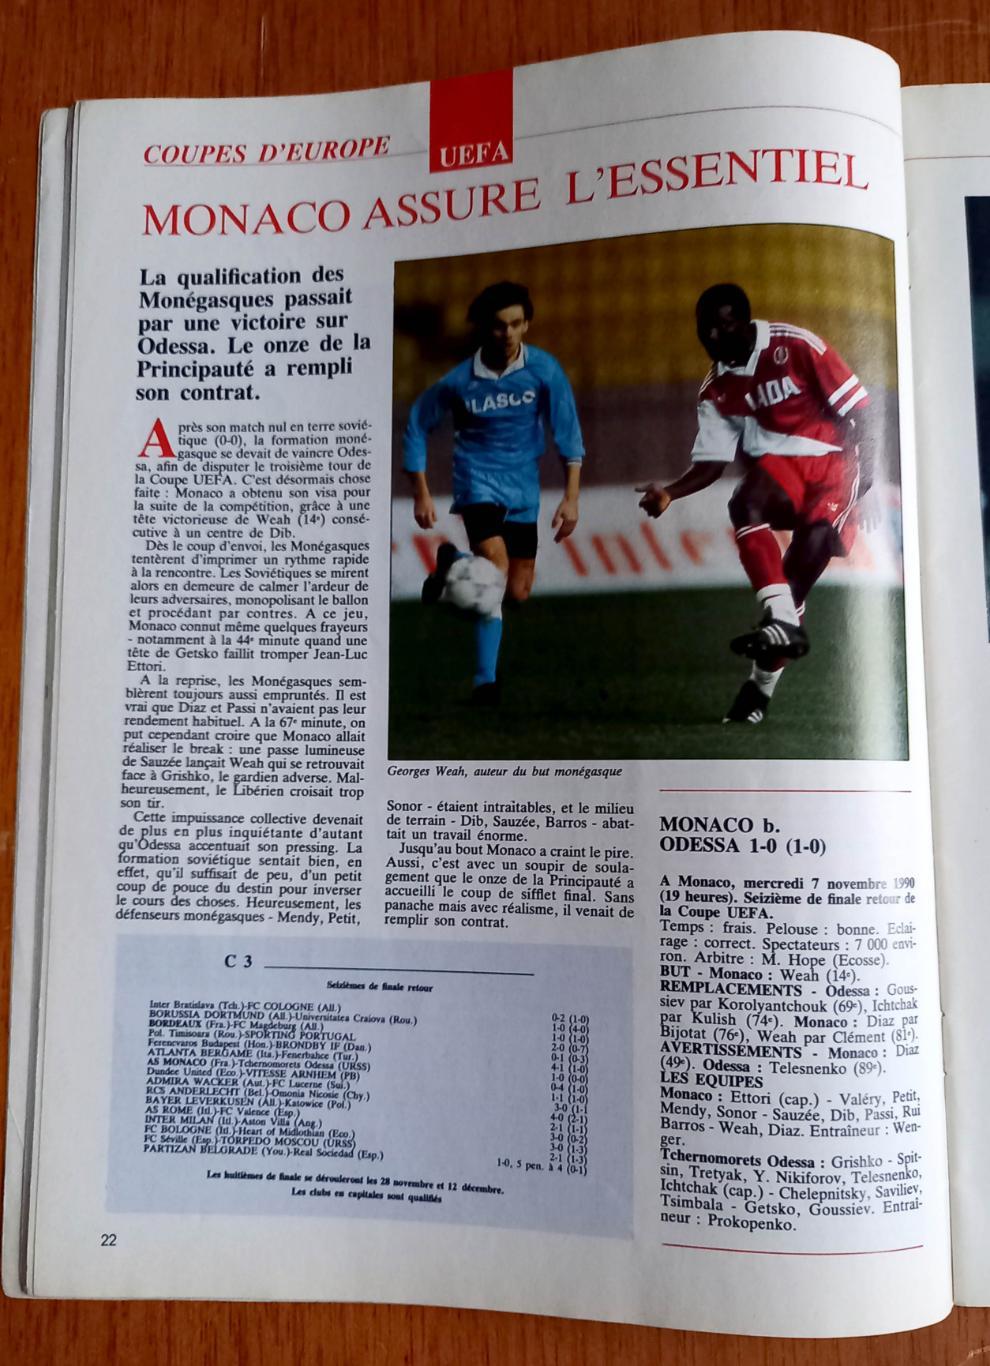 Футбол. Журнал Football Clubs (Франция). Декабрь 1990. Черноморец Одесса 2